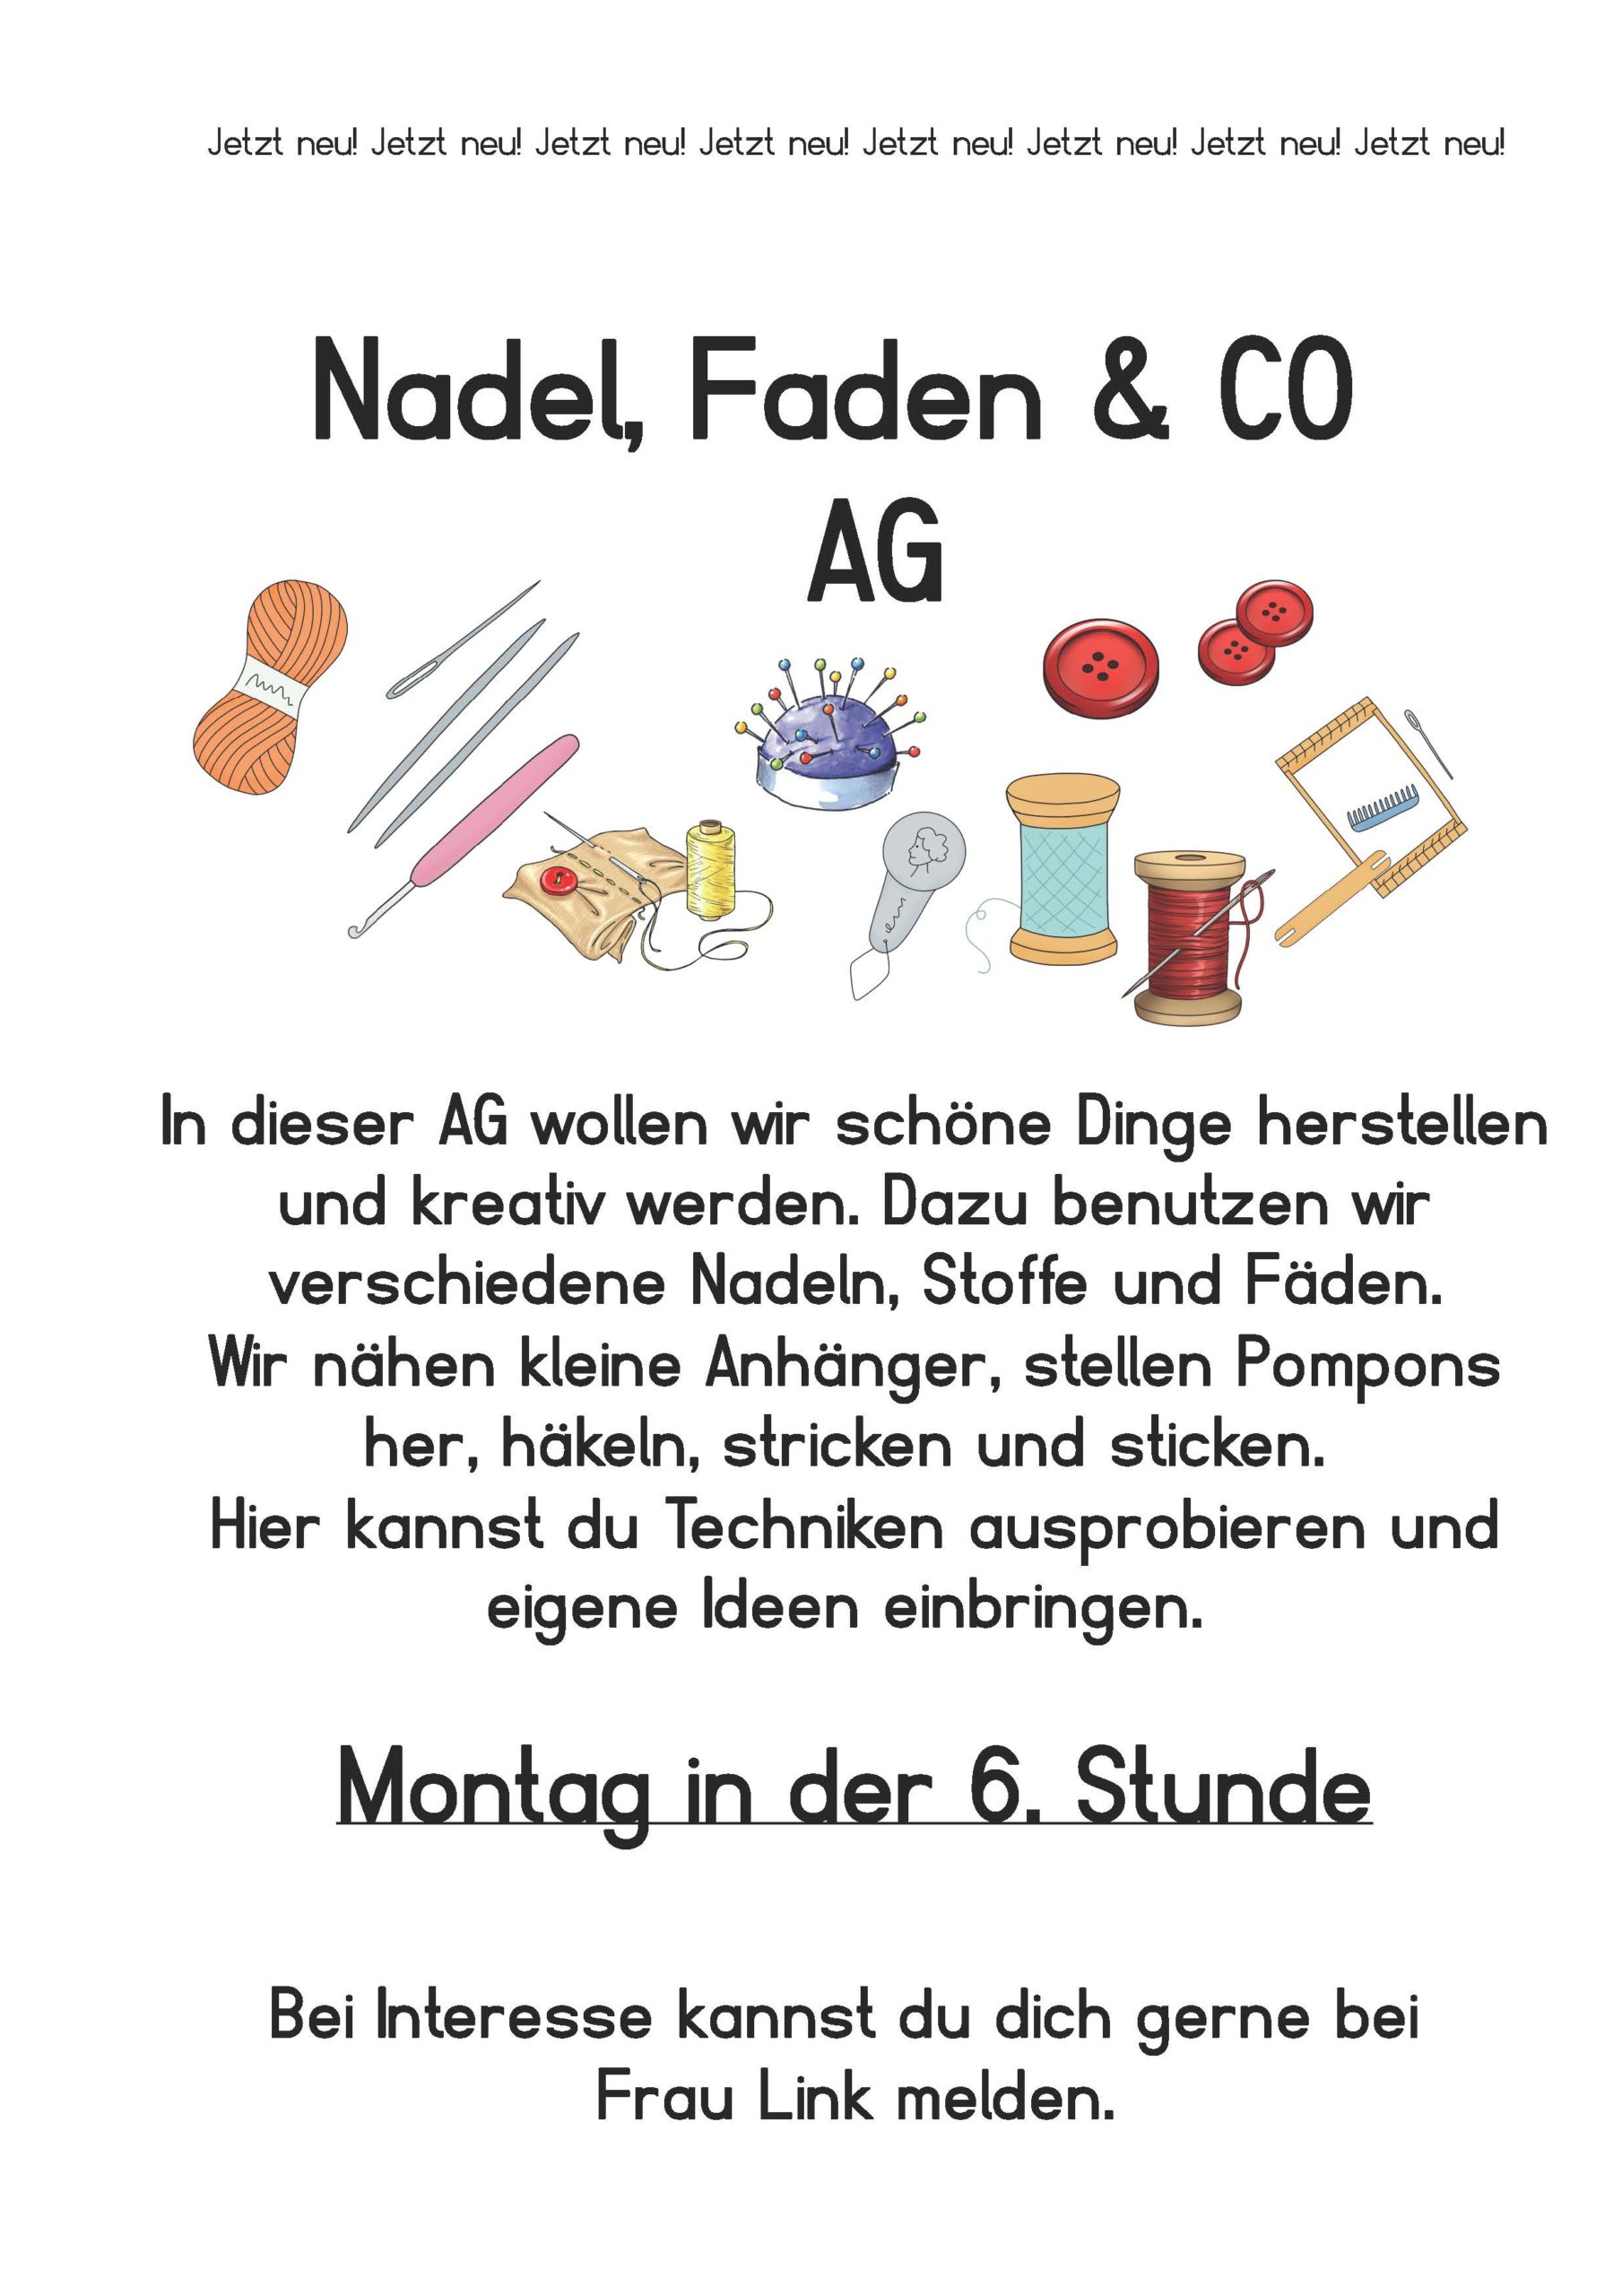 Nadel & Faden  Lübeck-Management e.V.